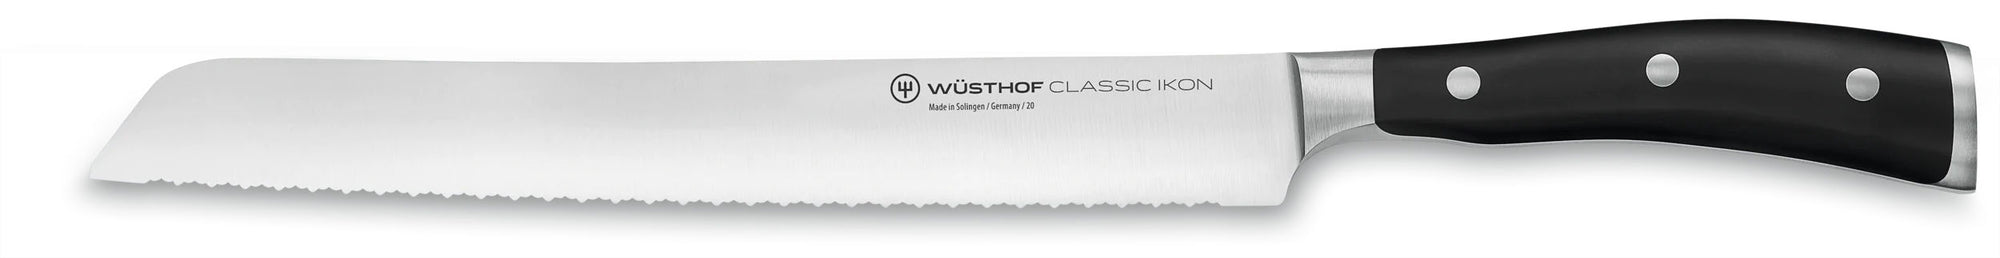 Wusthof Classic IKON Bread Knife, 9-inch (23 cm), Double-Serrated - 4163-23